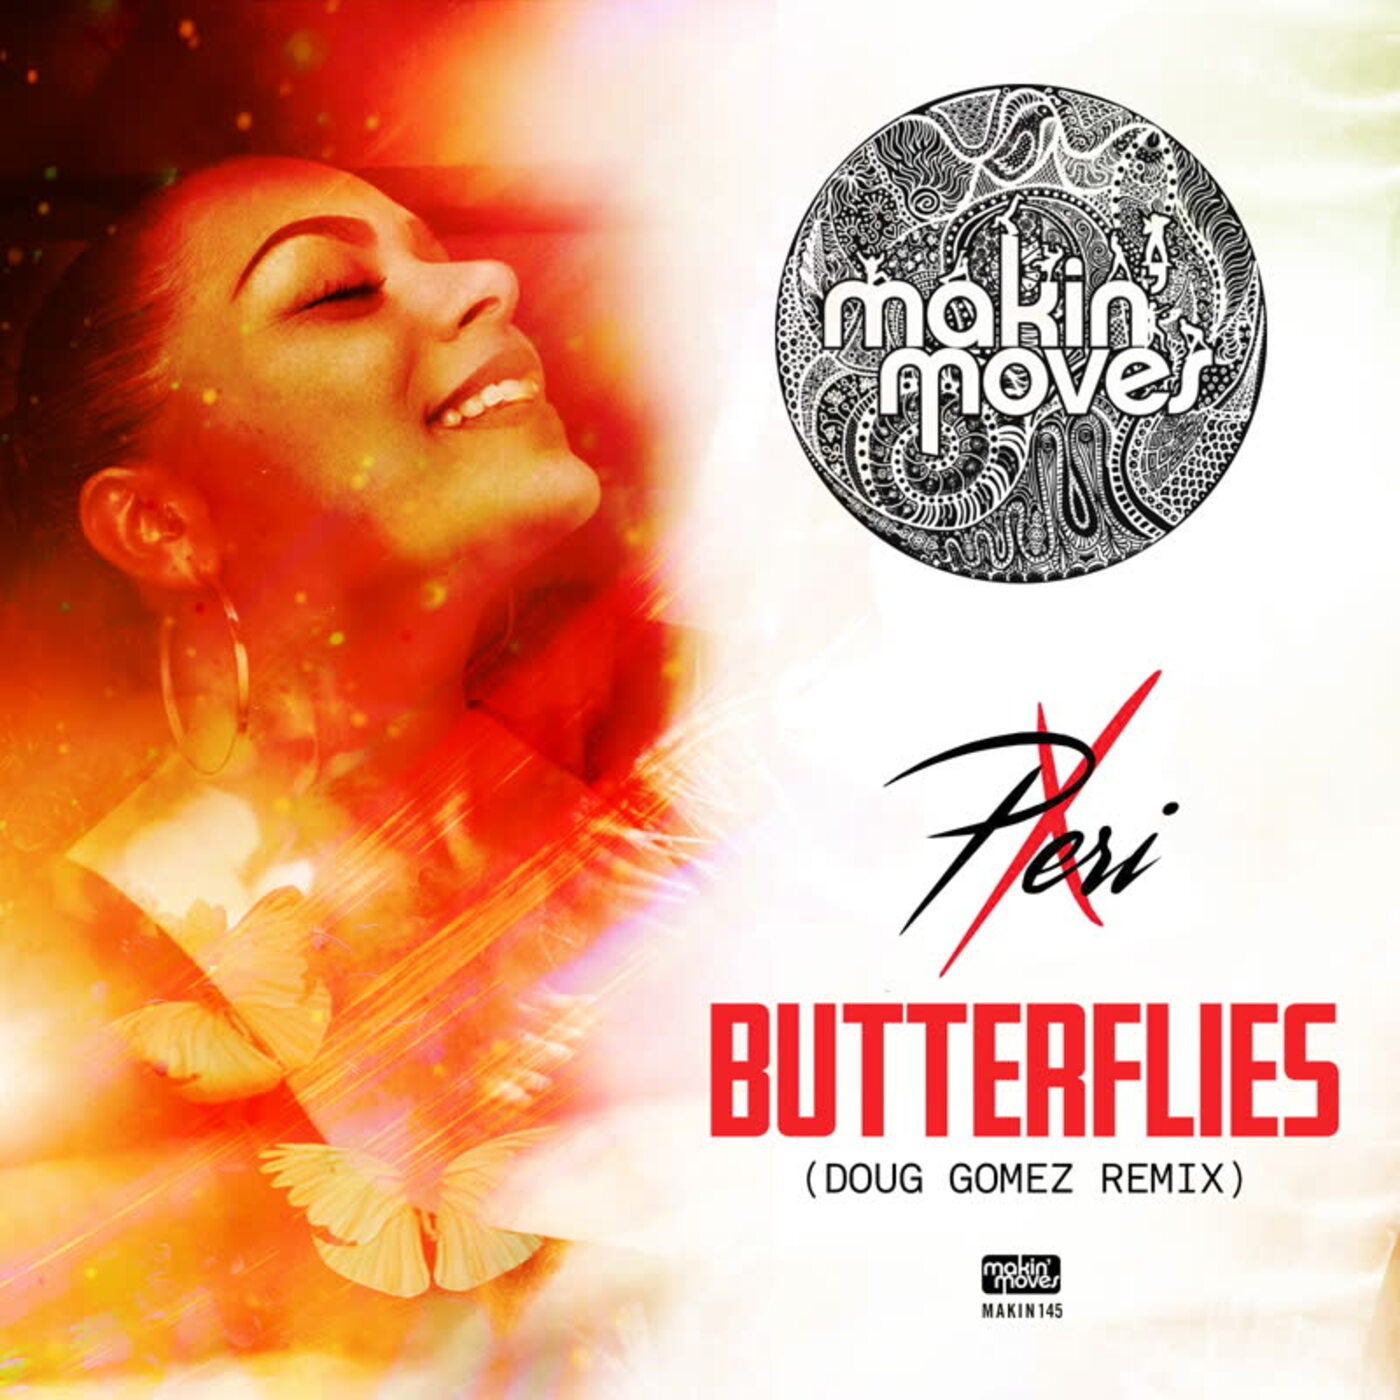 Peri X - Butterflies (Doug Gomez Remix) [MAKIN145]